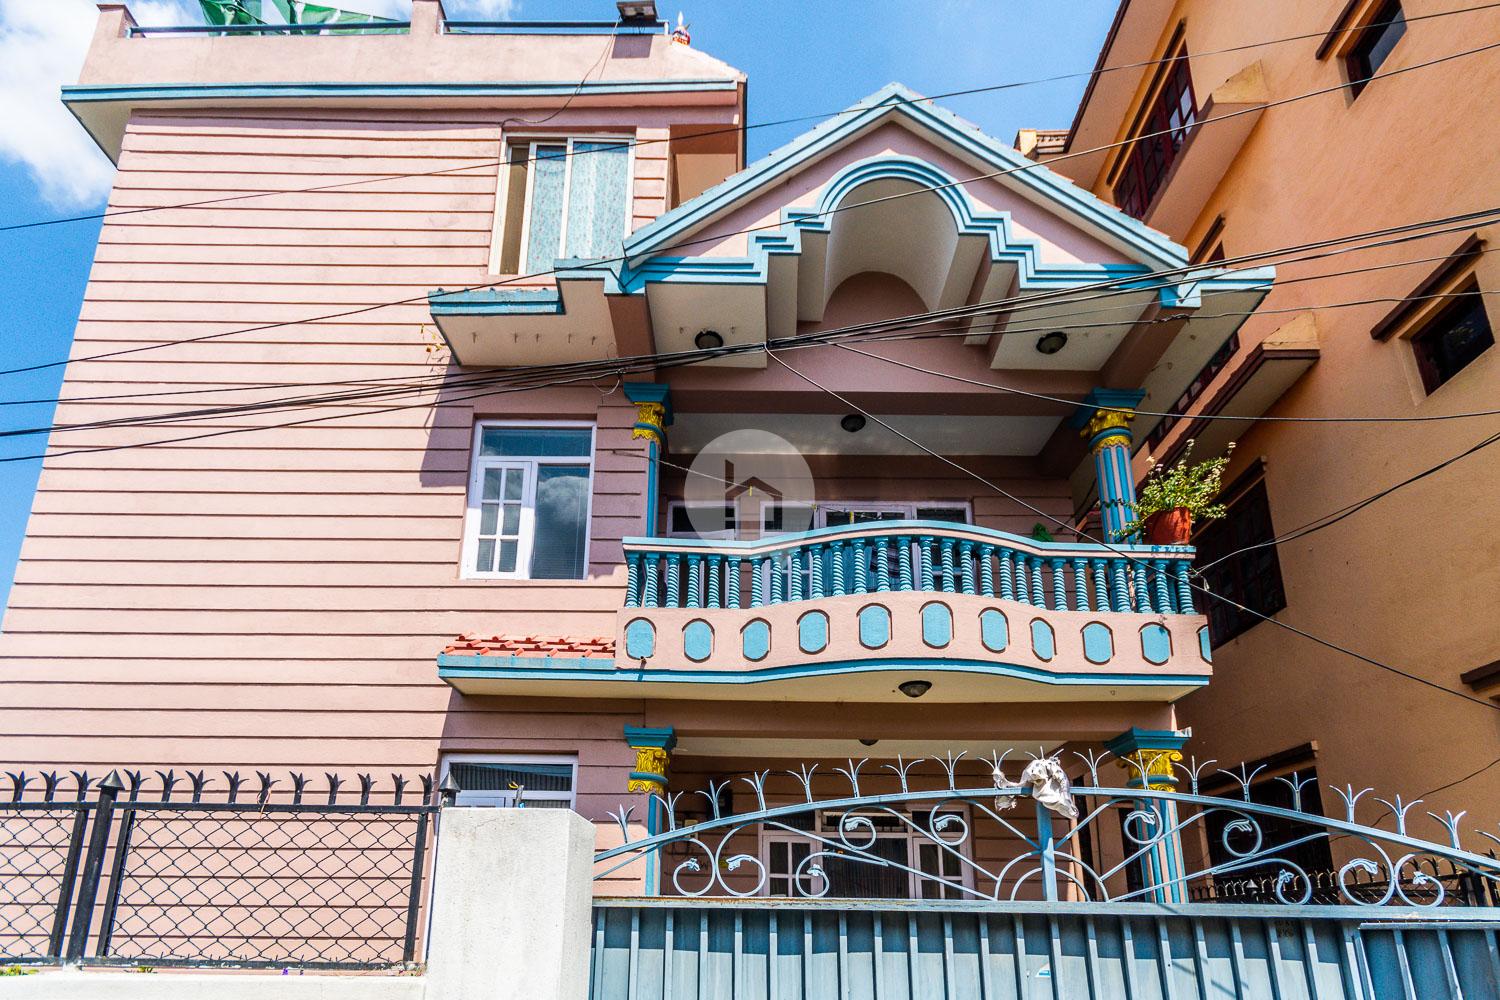 Residential House sale : House for Sale in Sukedhara, Kathmandu Image 2